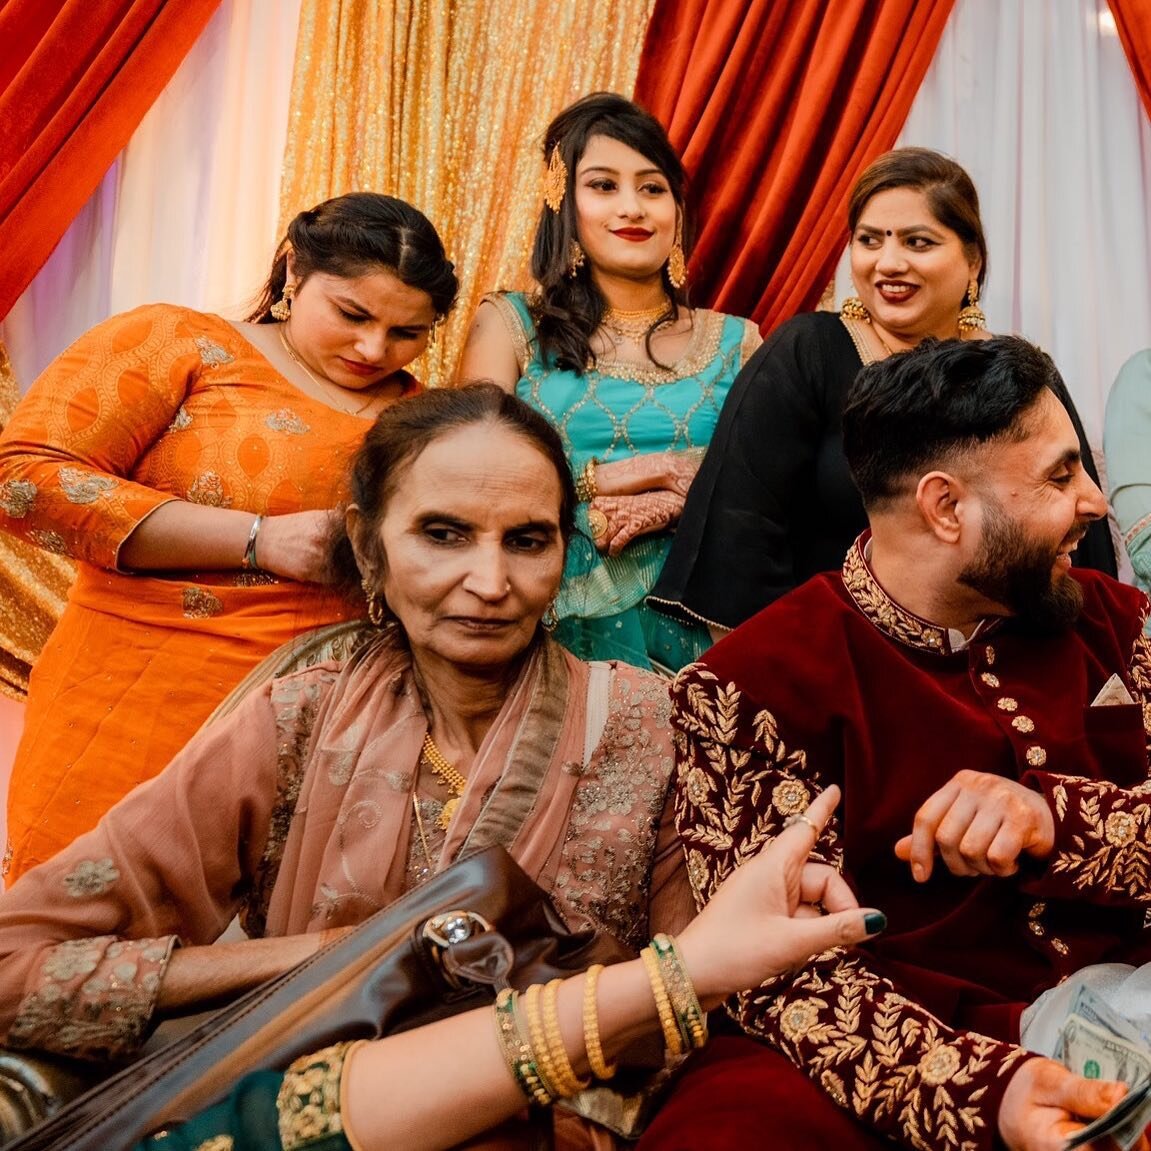 T&amp;Y 💗- January 29, 2021 - Long Island, New York
&bull;
&bull;
&bull;
&bull;
#nikkah #muslimcouple #muslimphotographer #beautifulwedding #love #nikkahday #weddingday #reception #bengaliwedding #bengalinikkah #pakistaniweddings #weddingseason #wed